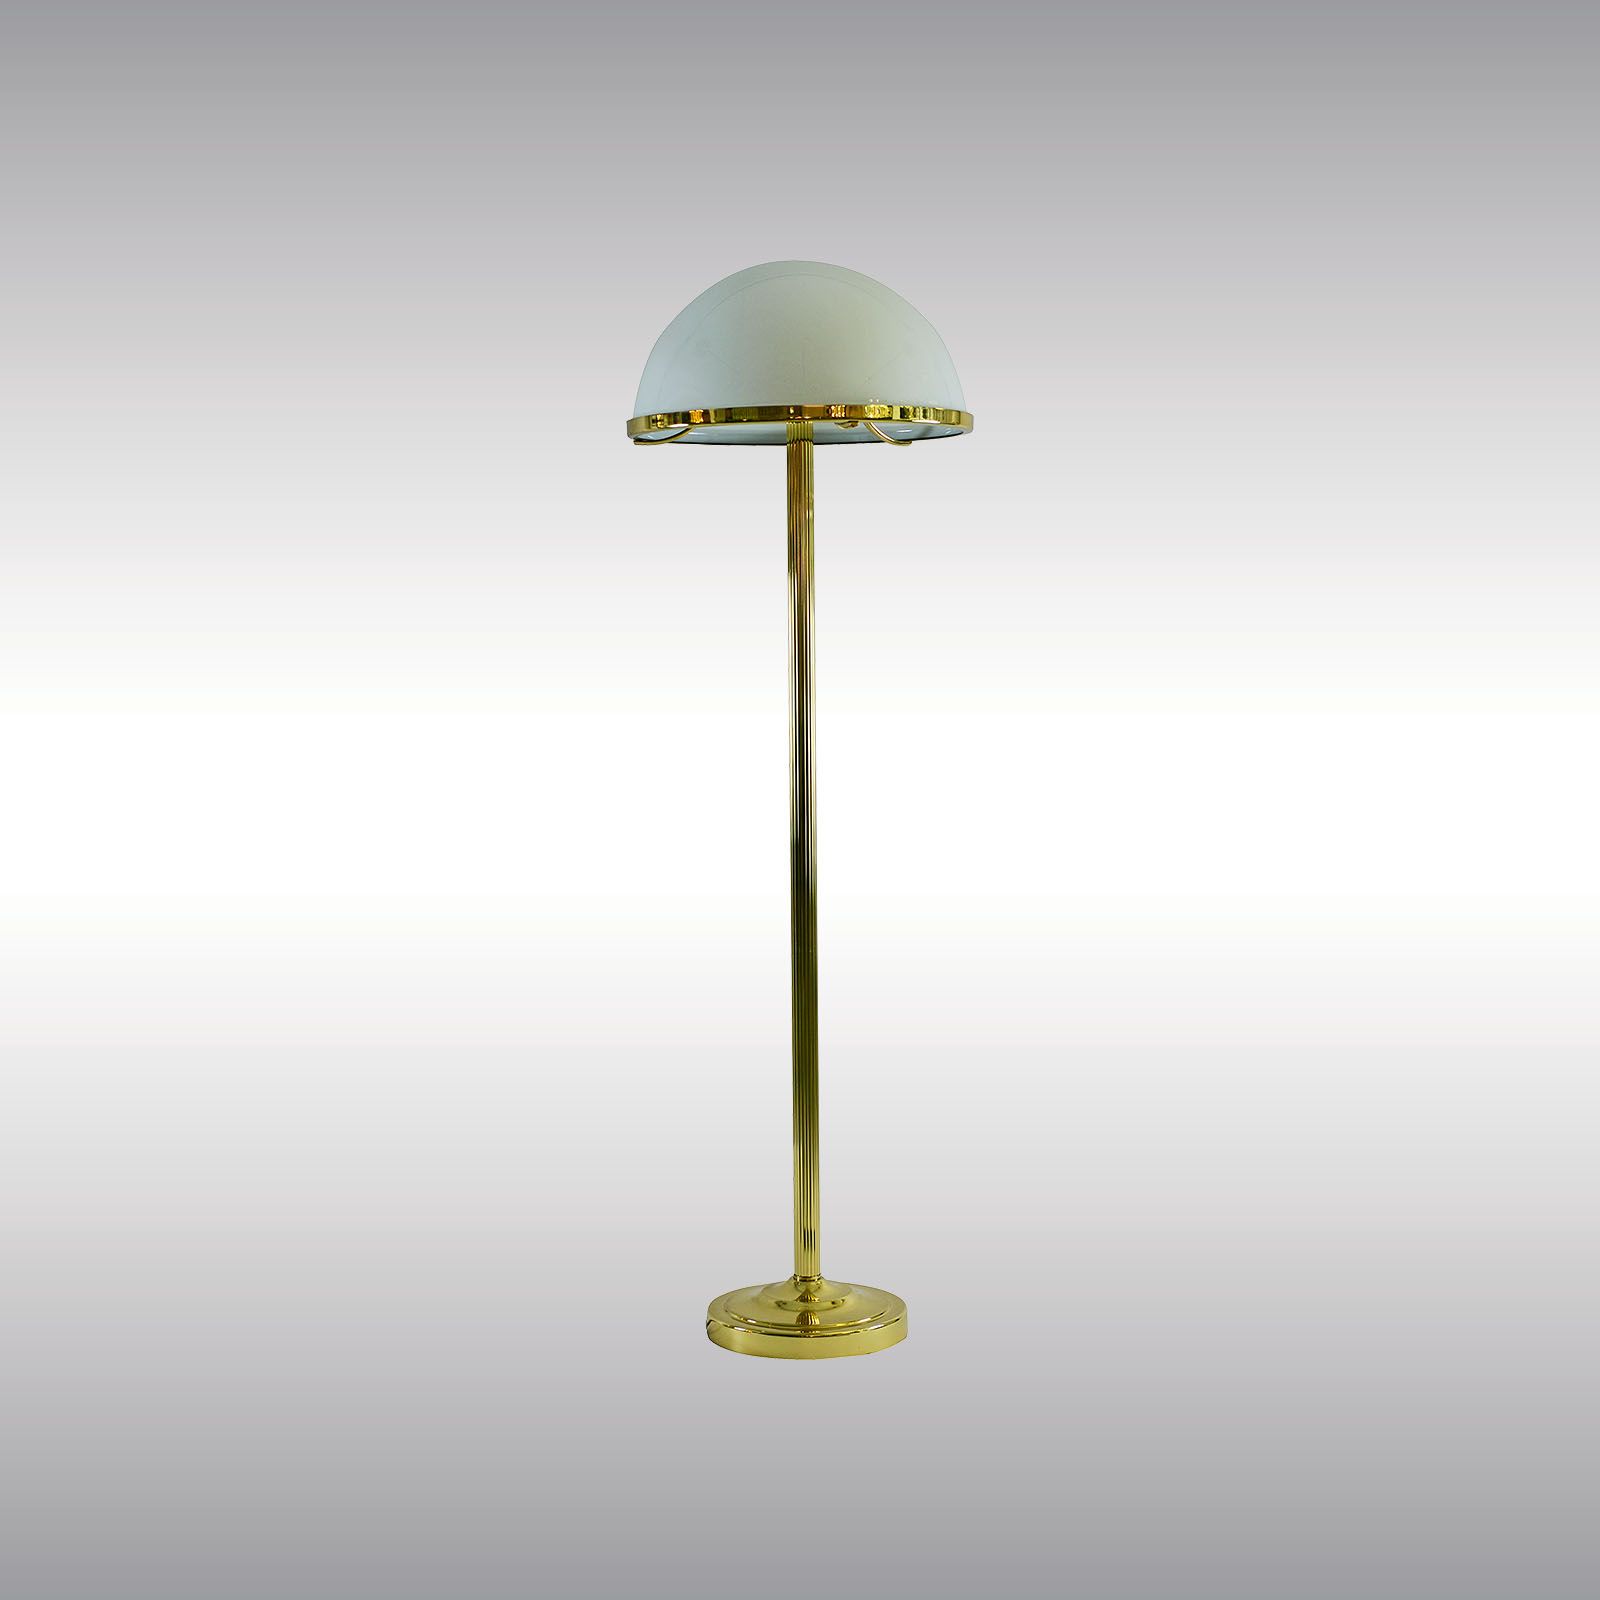 WOKA LAMPS VIENNA - OrderNr.: 25|LST3 - Design: Adolf Loos